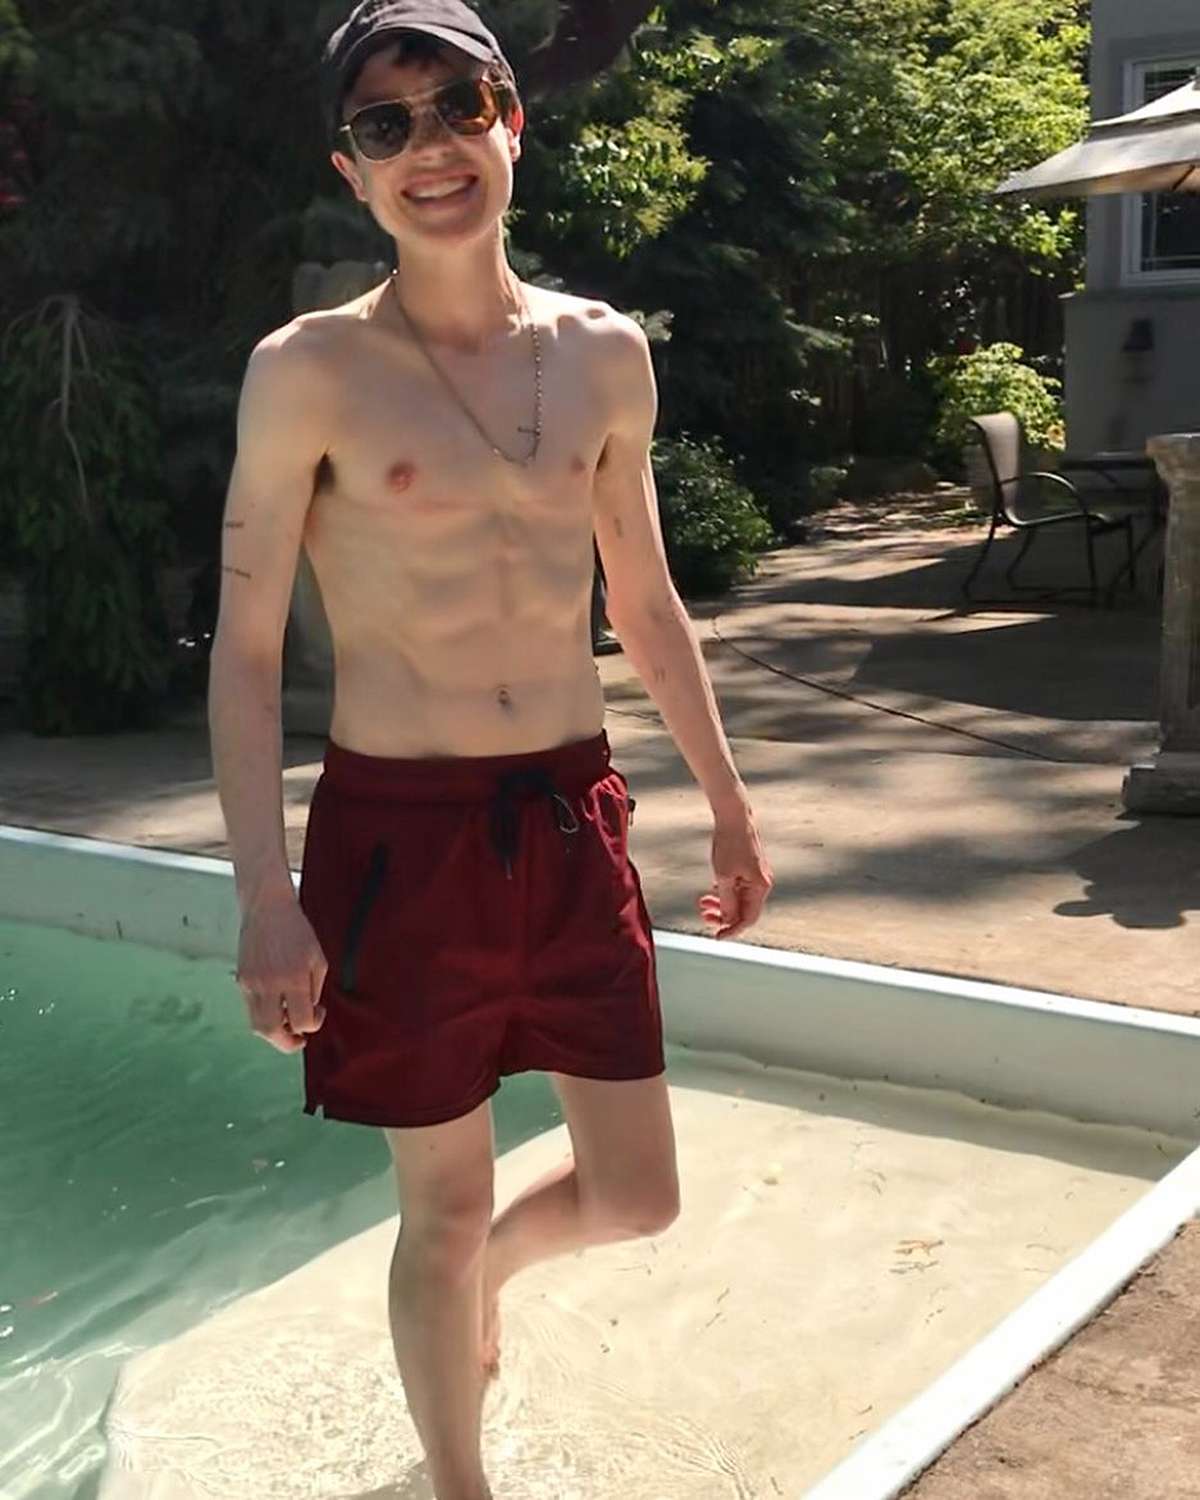 Elliot Page Beams in Shirtless Poolside Shot | PEOPLE.com